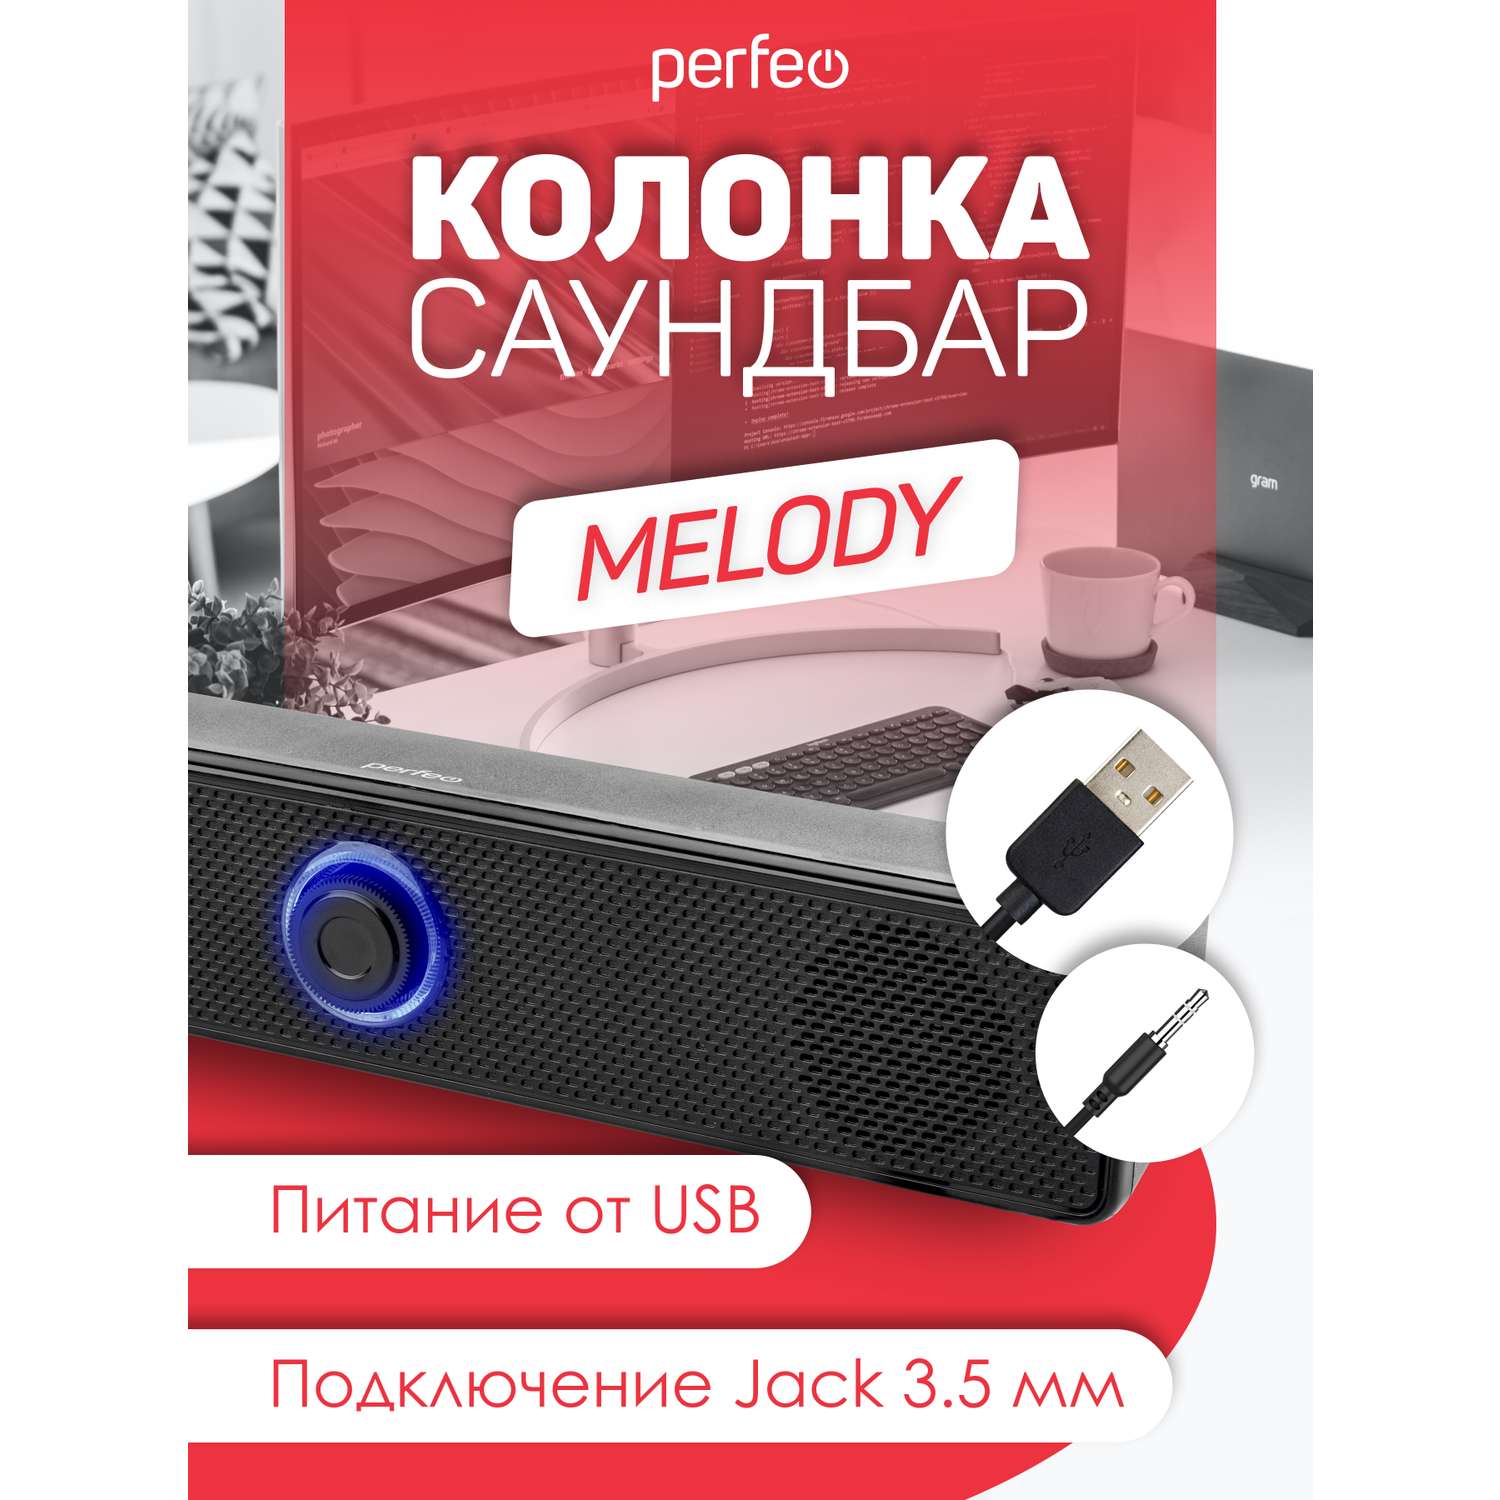 Колонка-саундбар Perfeo компьютерная MELODY мощность 6 Вт USB пластик черный - фото 5